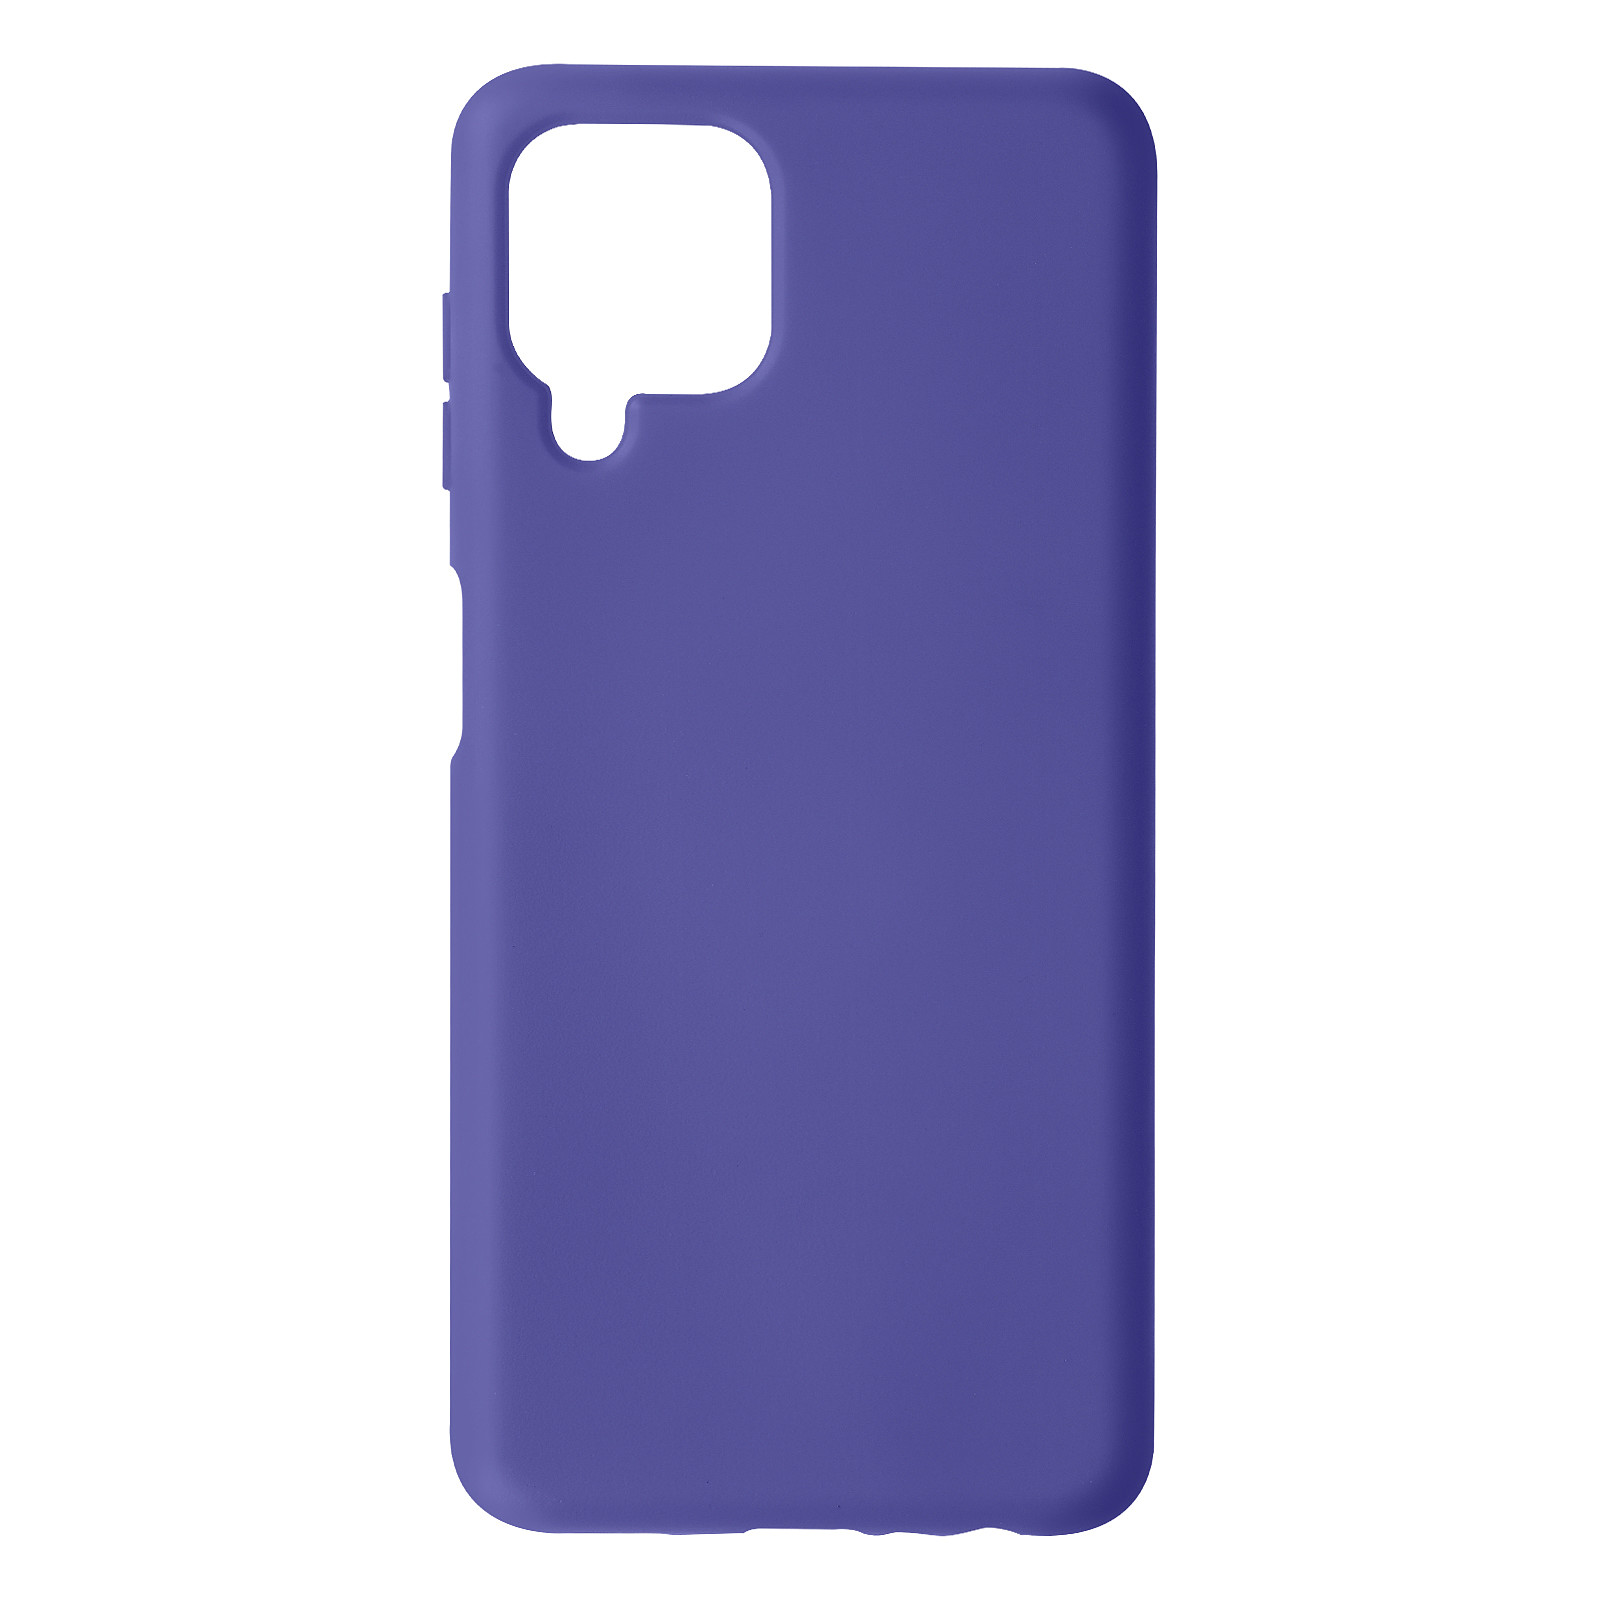 Avizar Coque pour Samsung Galaxy A22 Silicone Semi-rigide Finition Soft Touch Fine Violet - Coque telephone Avizar